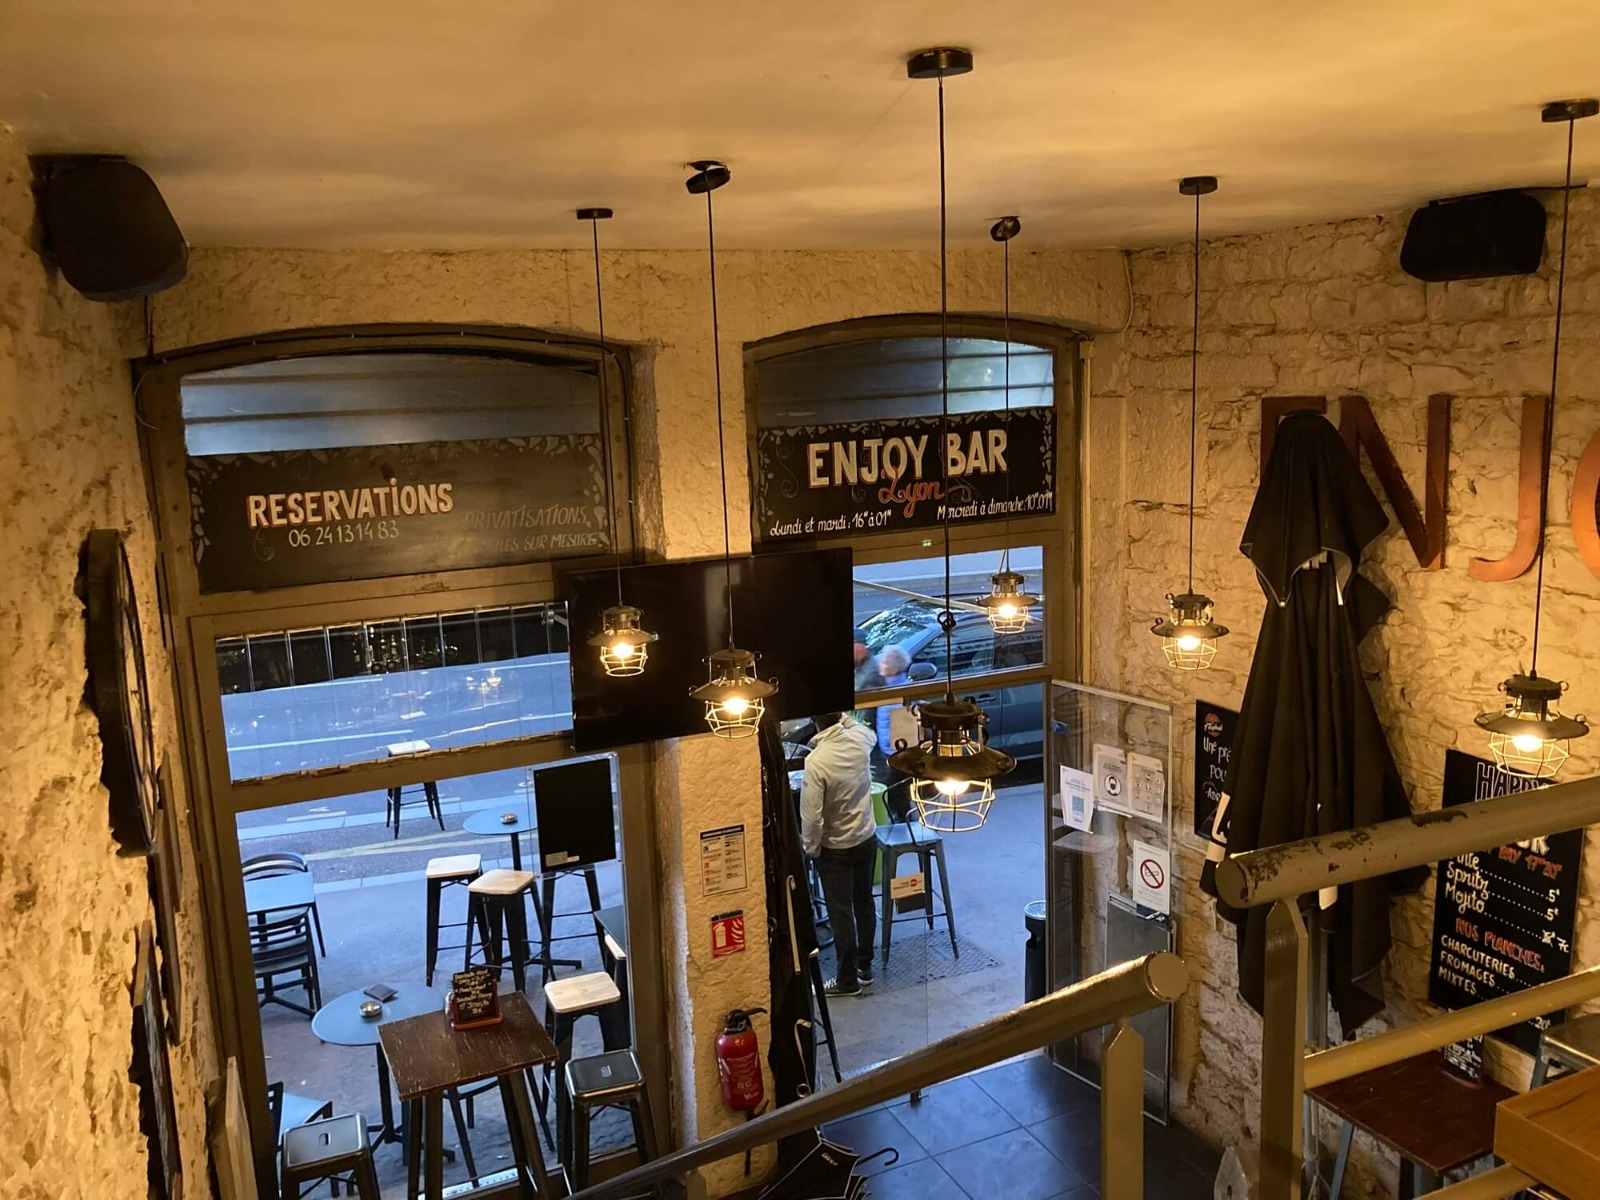 Installation de 2 enceintes Bose à l'Enjoy Bar à Lyon